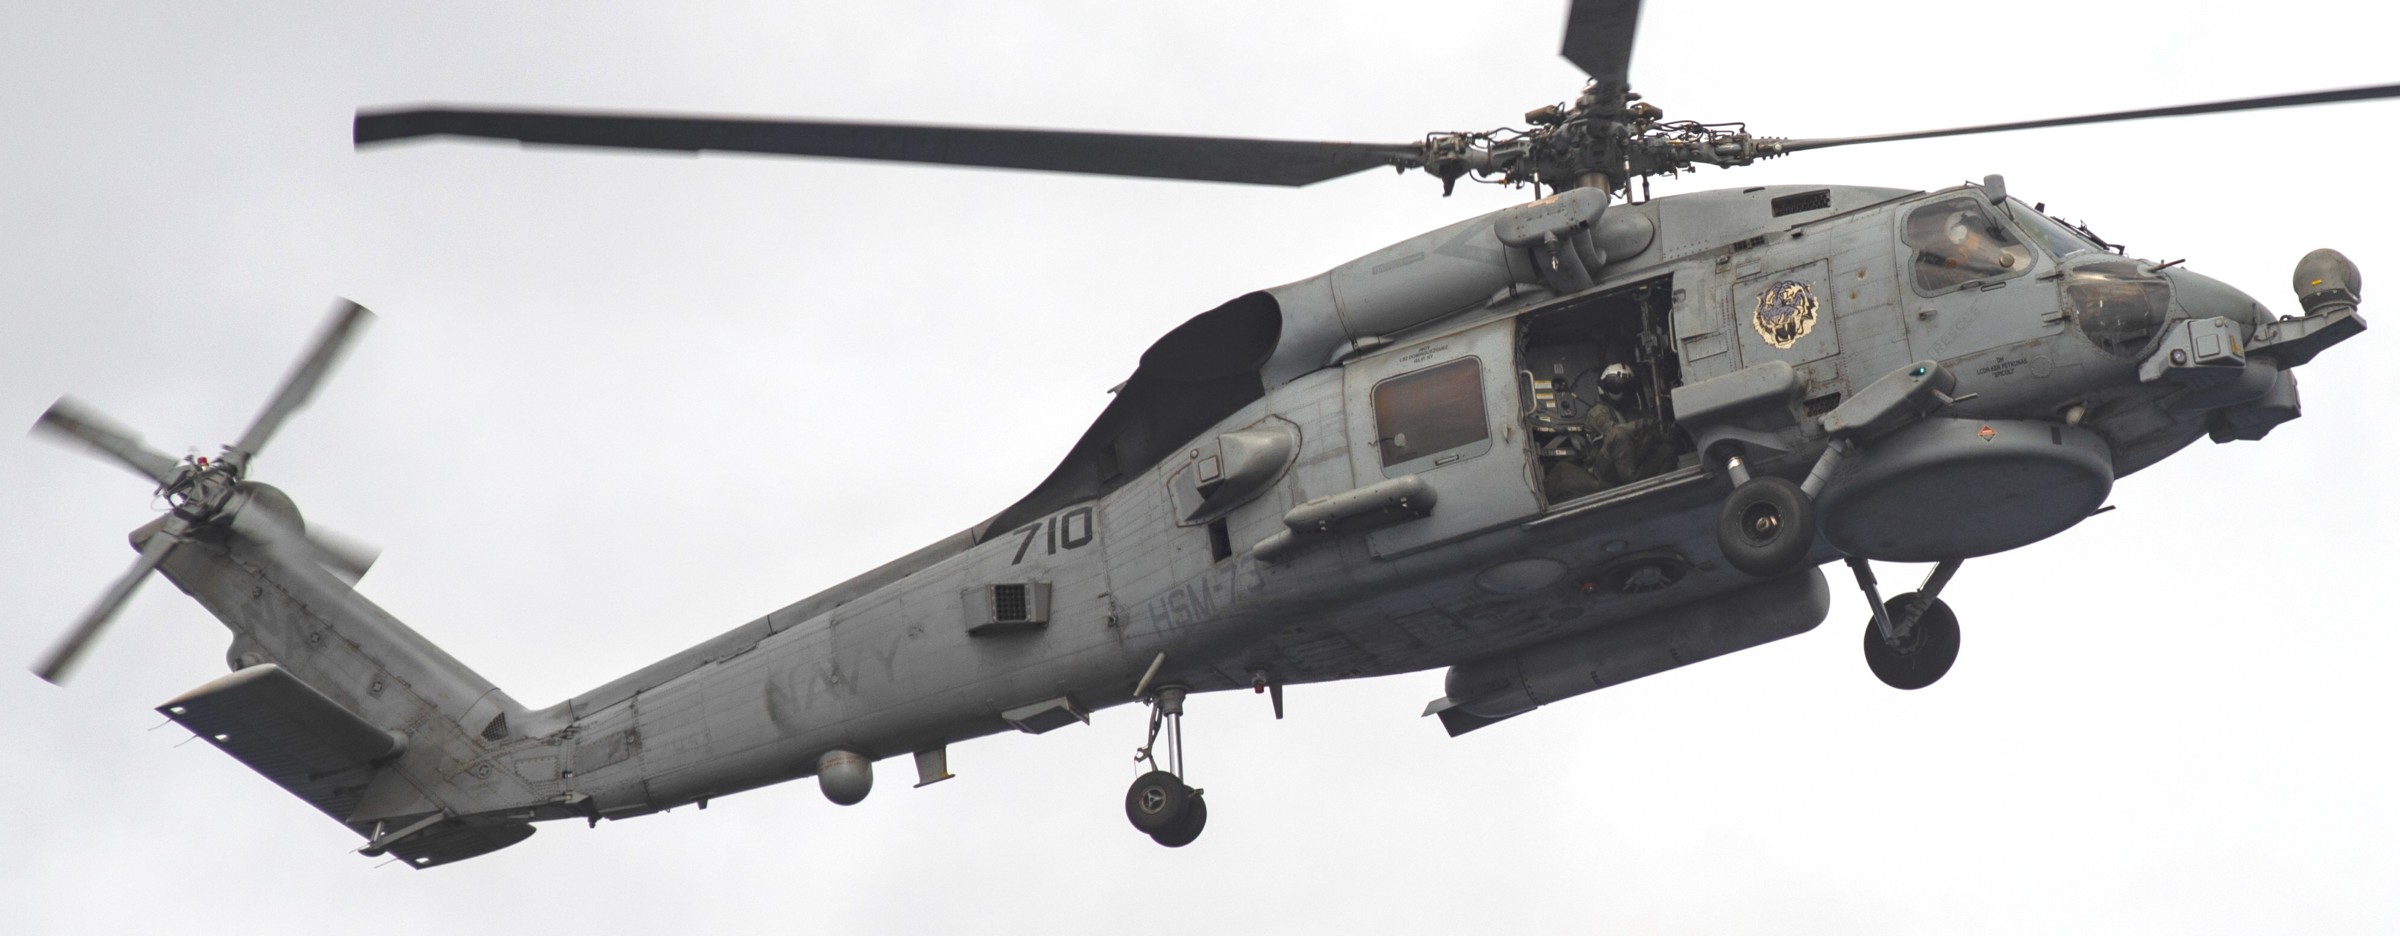 hsm-73 battlecats helicopter maritime strike squadron us navy mh-60r seahawk 2015 57 uss sterett ddg-104